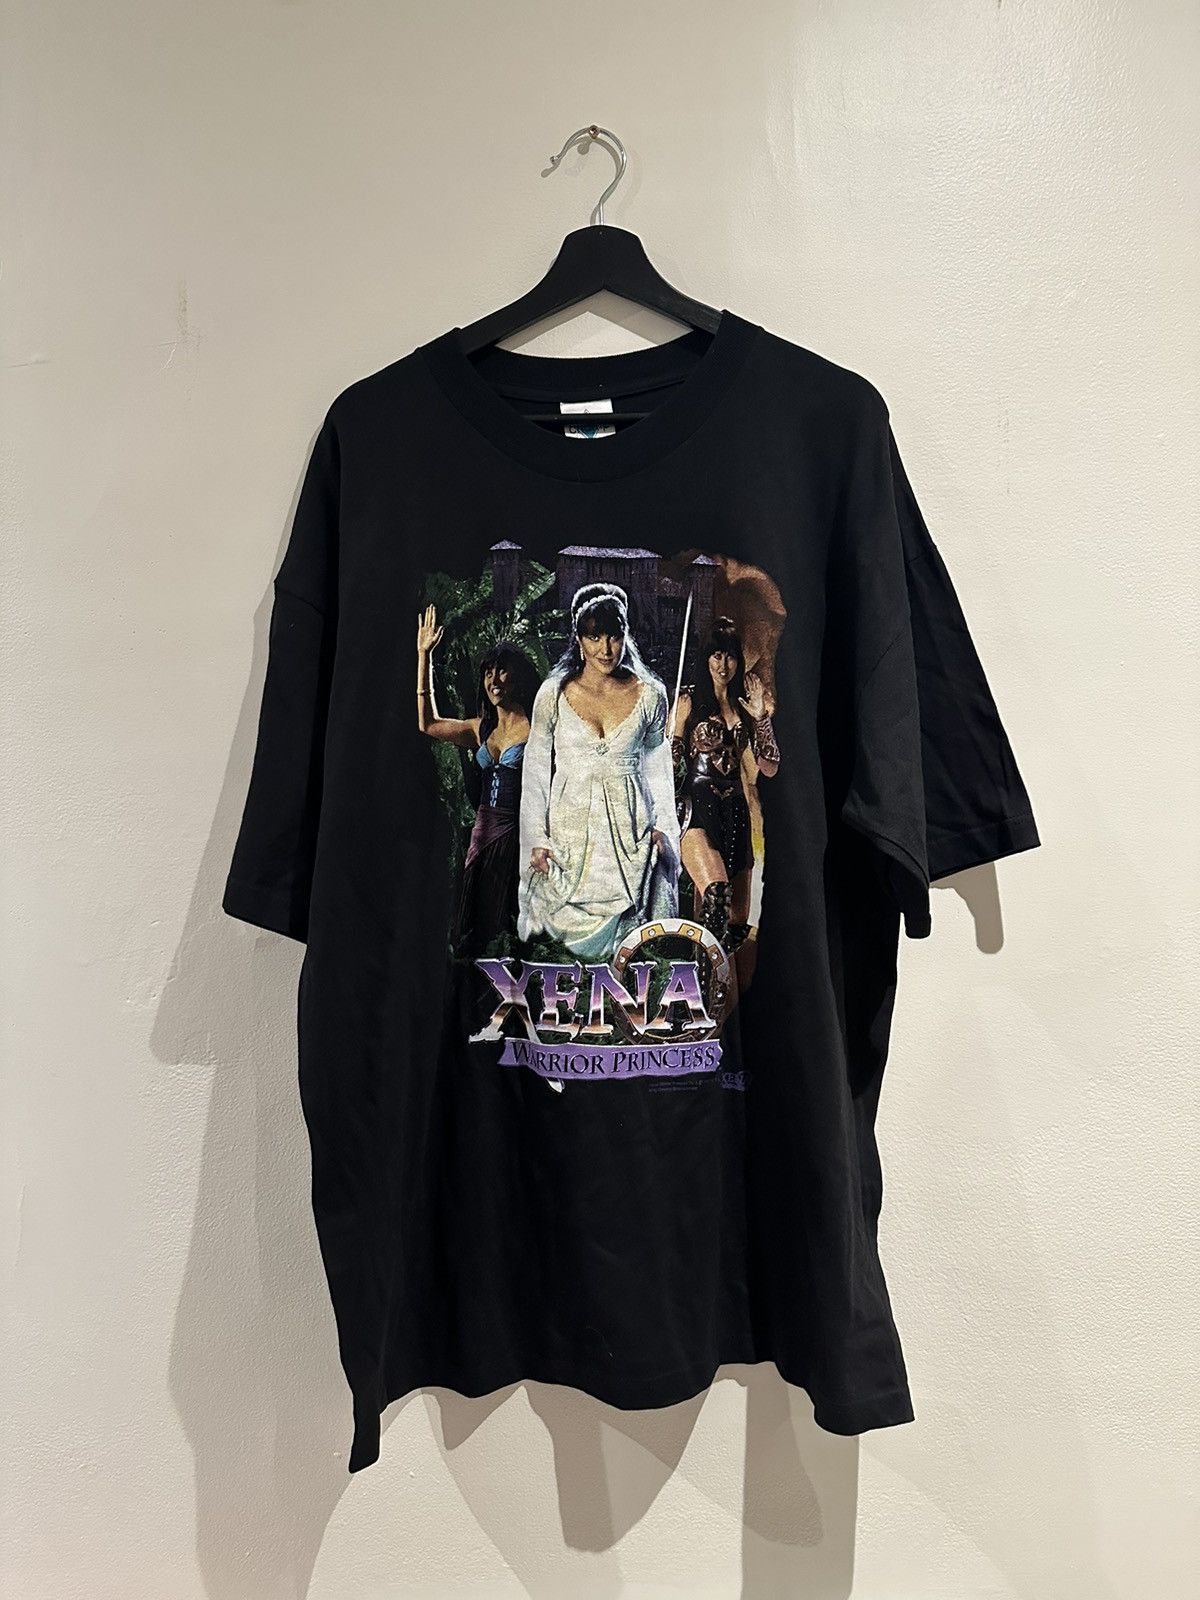 Xena Warrior Princess Shirt | Grailed